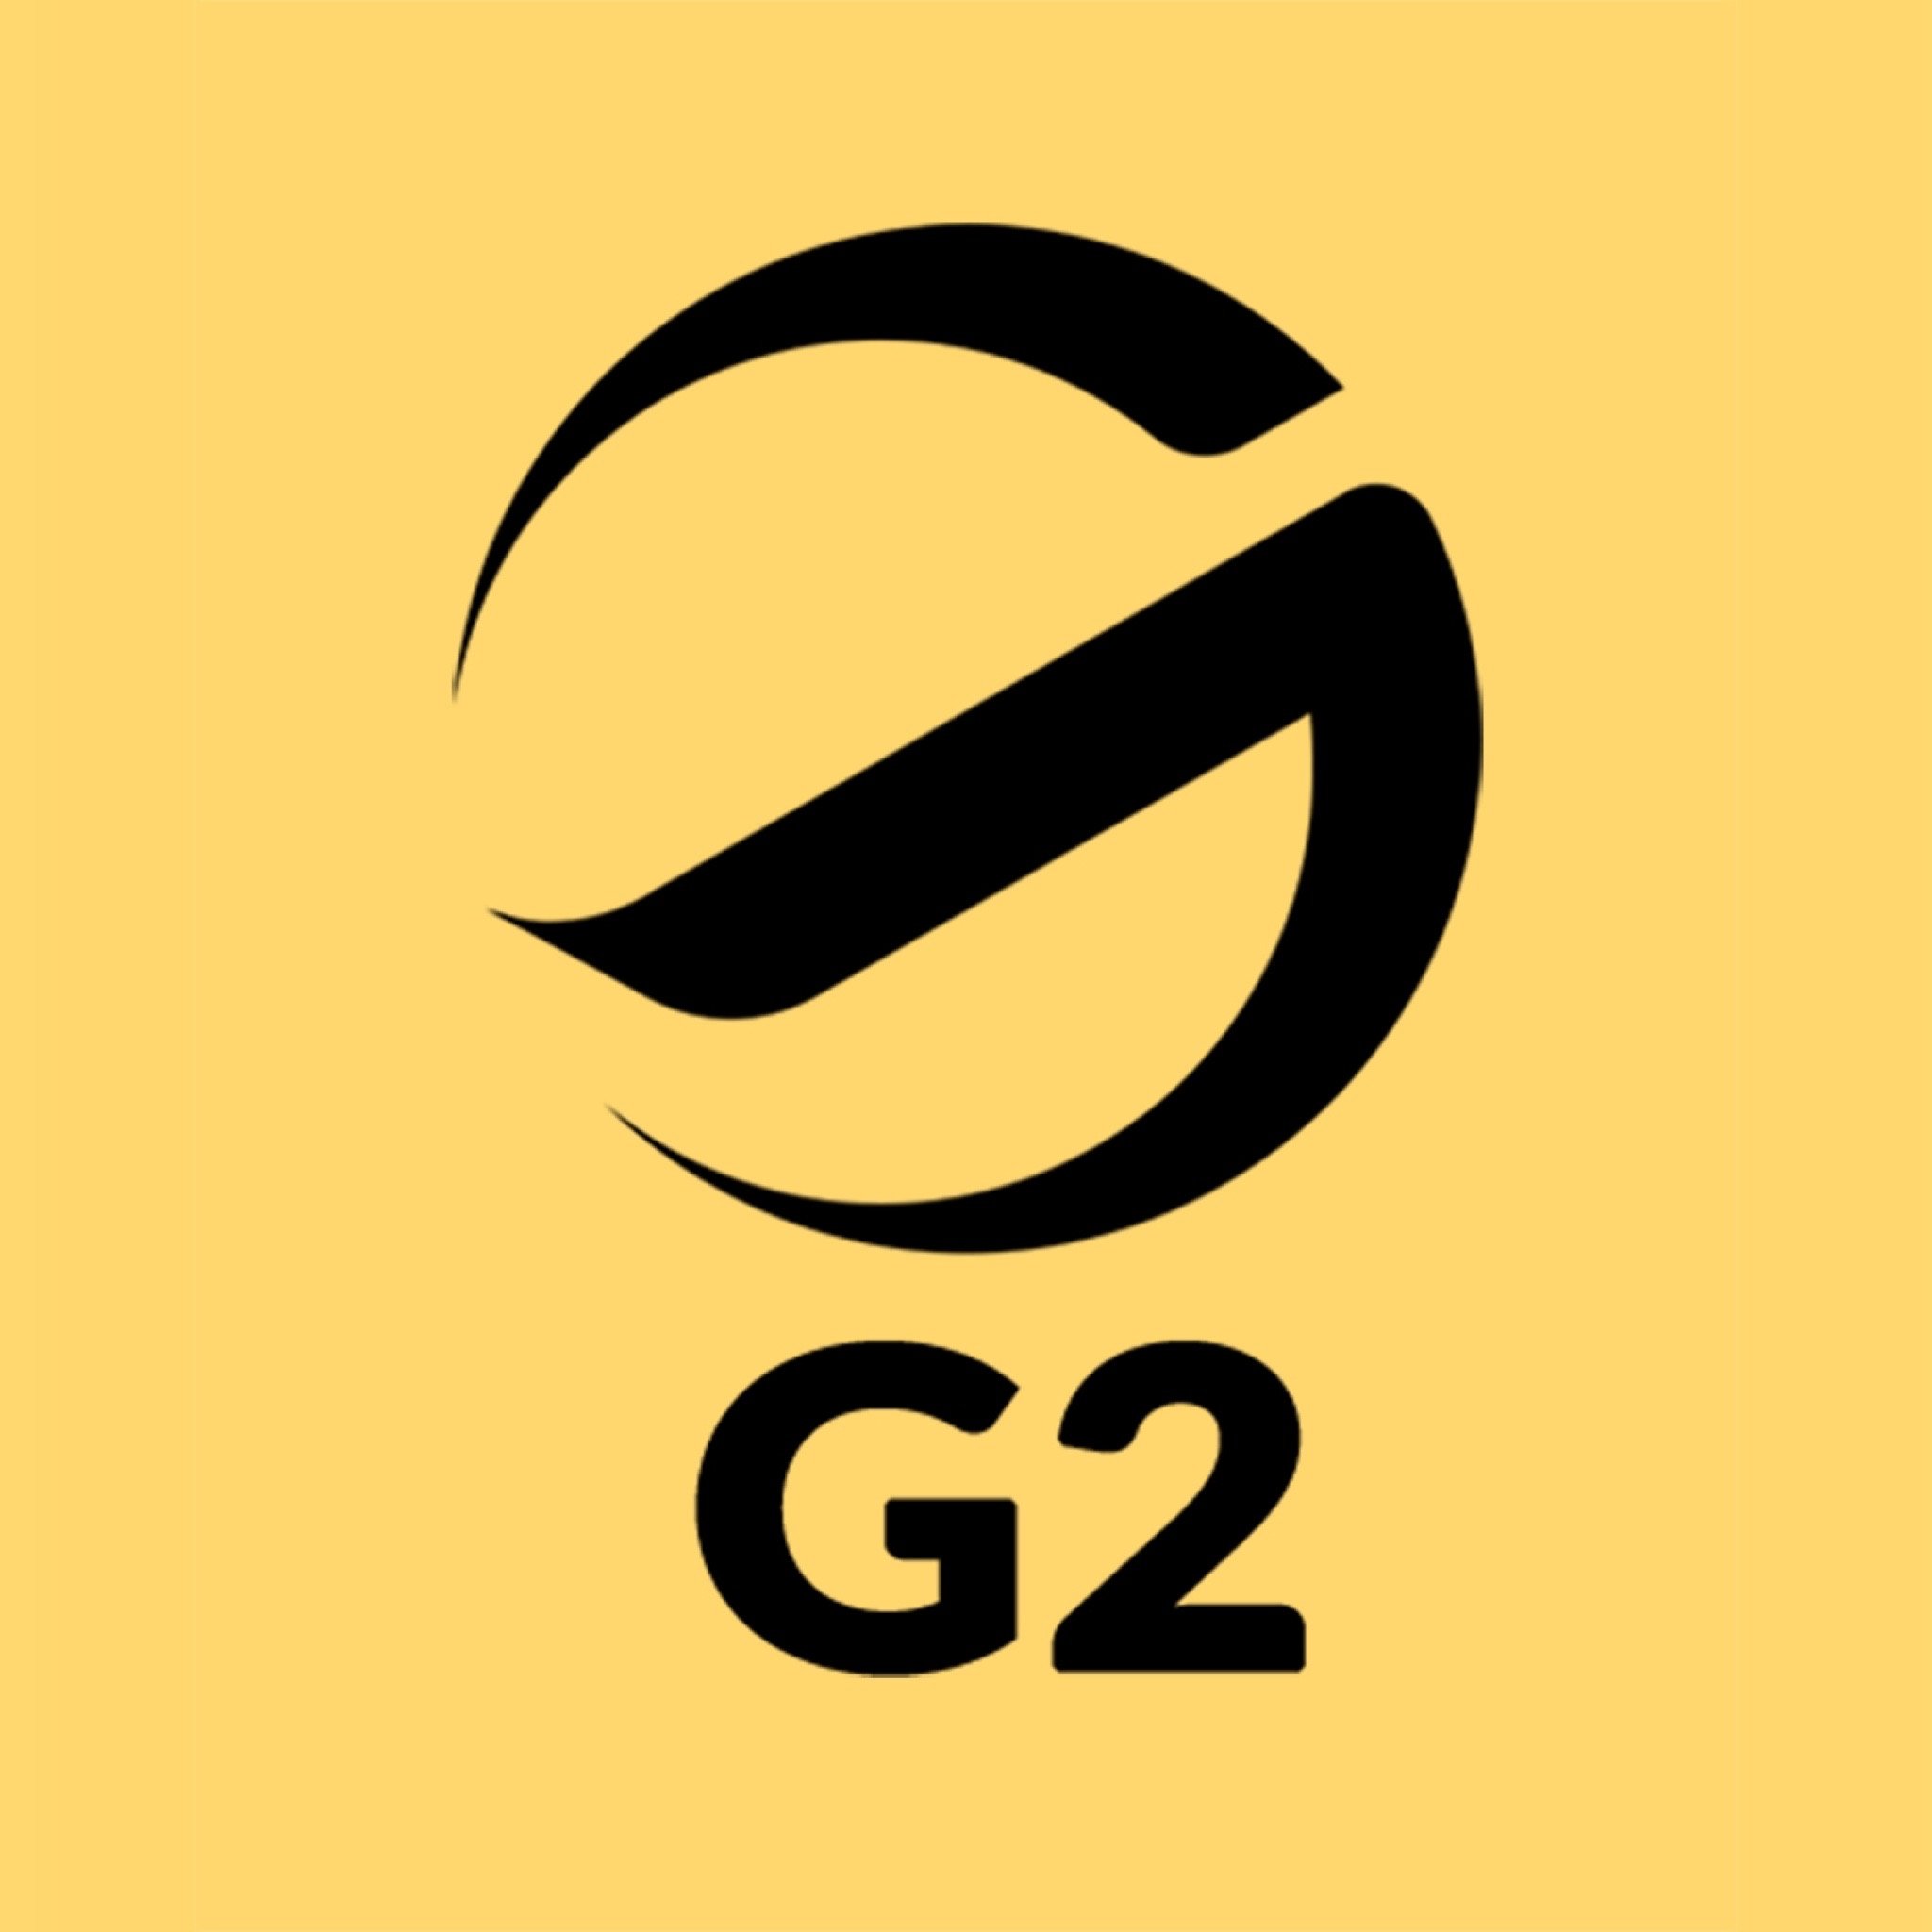 طراح ارشد محصول | Senior Product Designer - جی 2 هلدینگ | G2 Holding